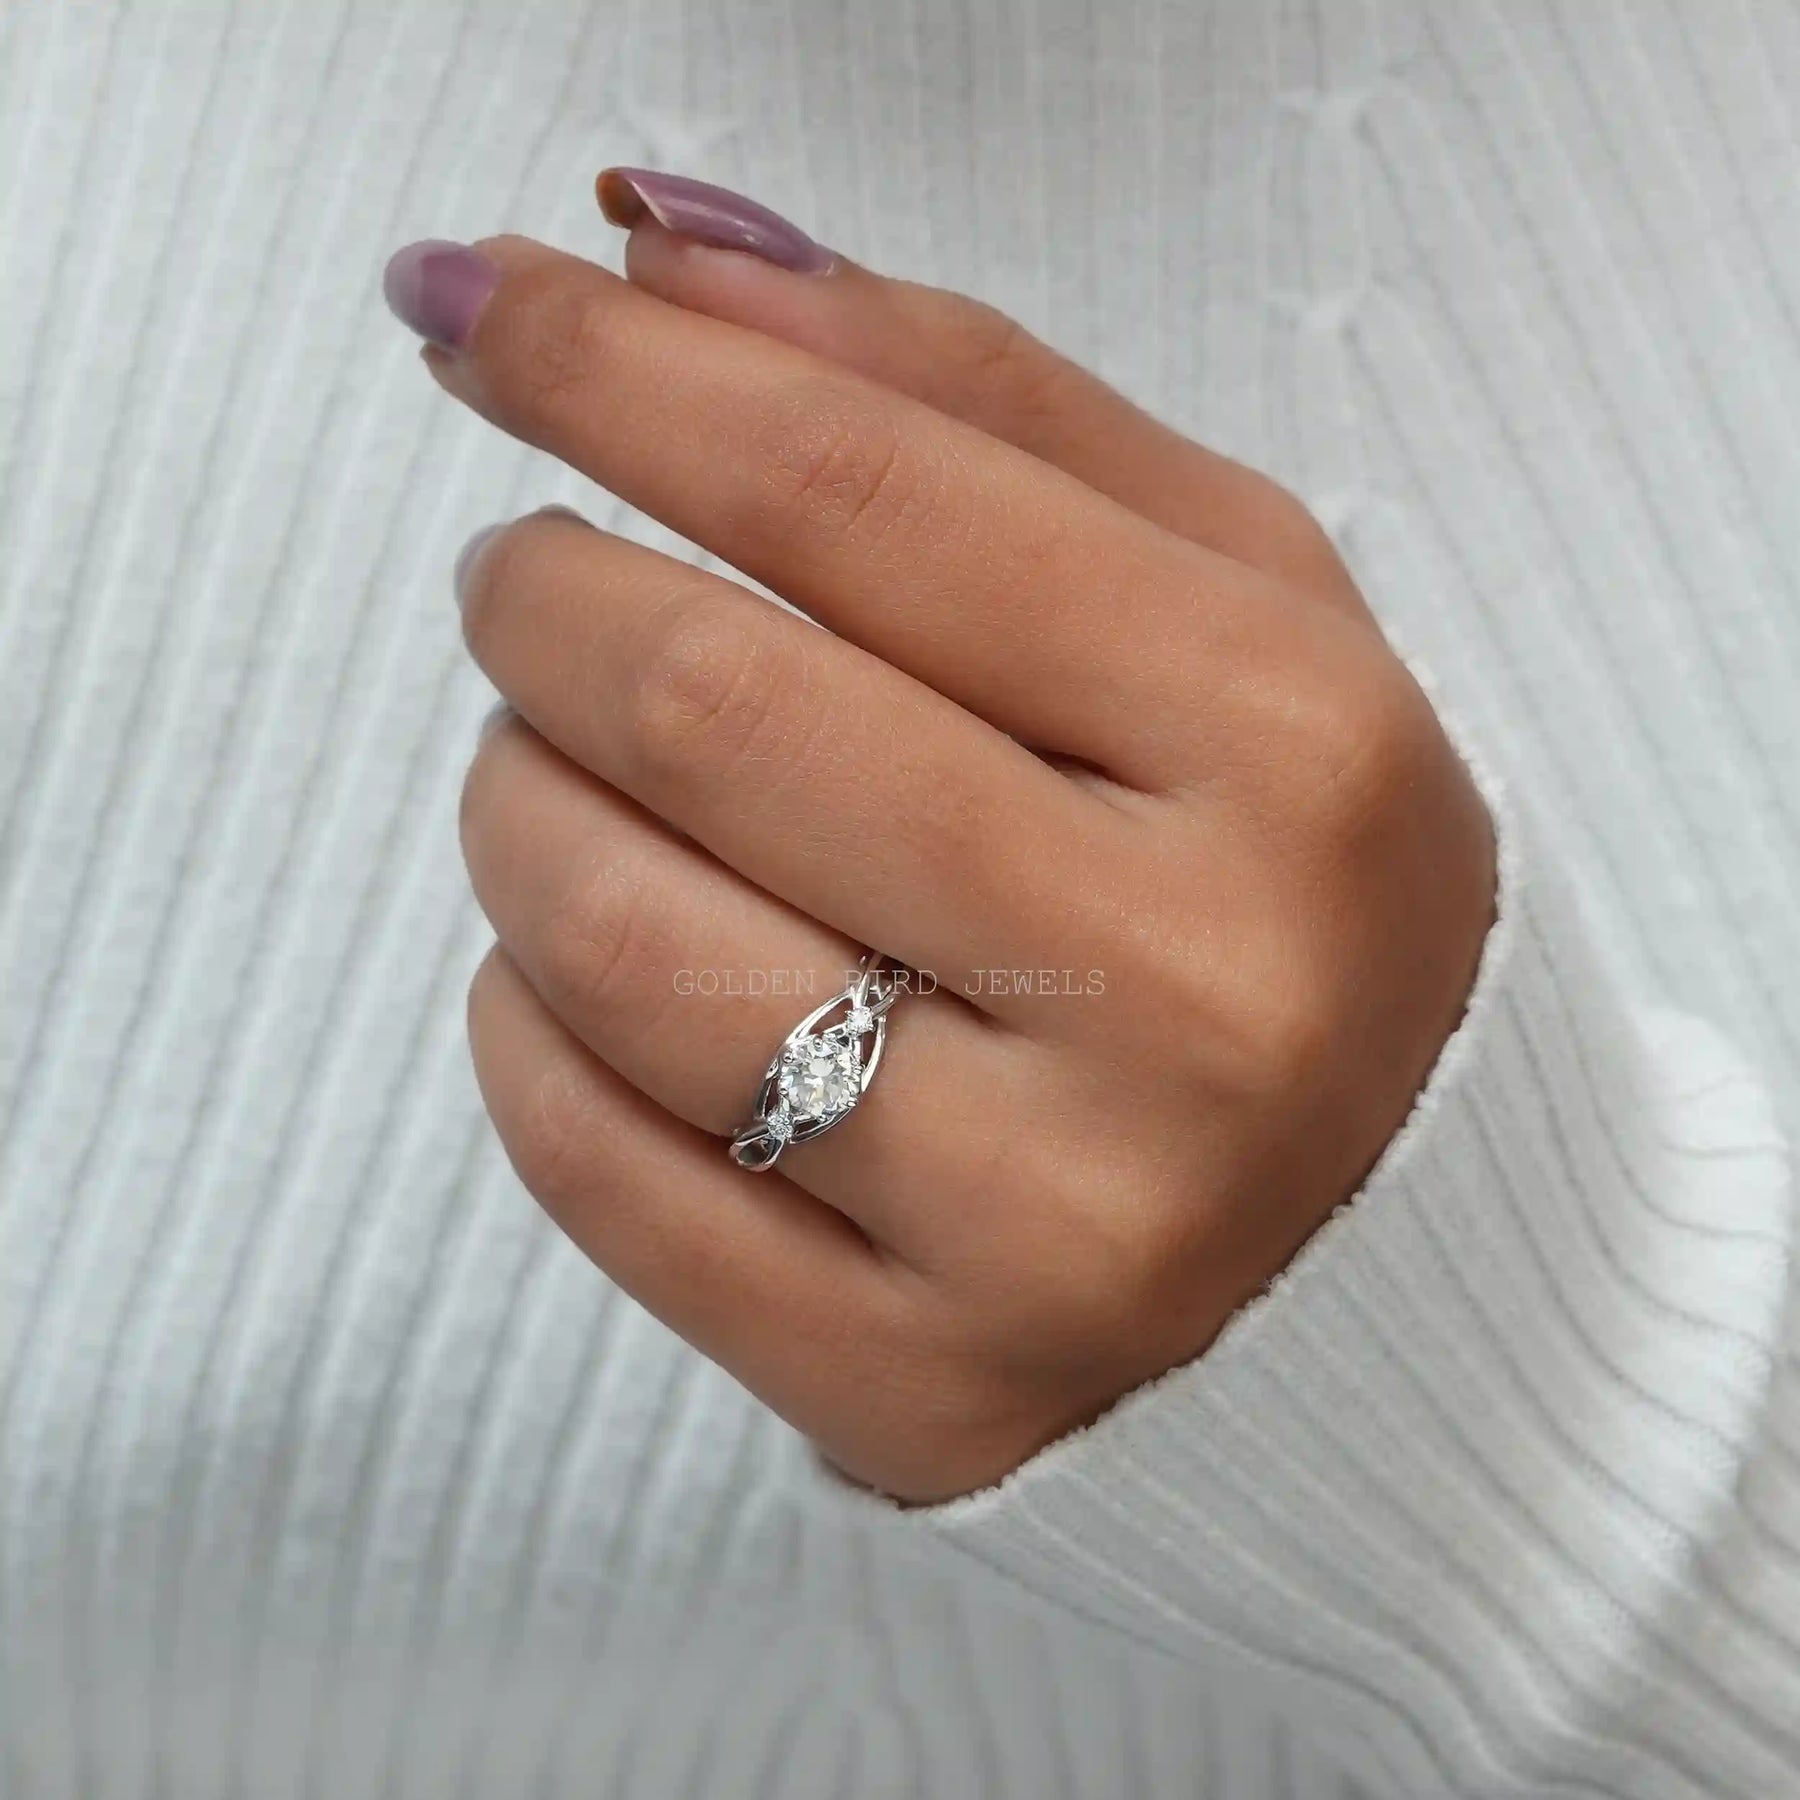 [This anniversary round cut ring set in round cut side stones]-[Golden Bird Jewels]